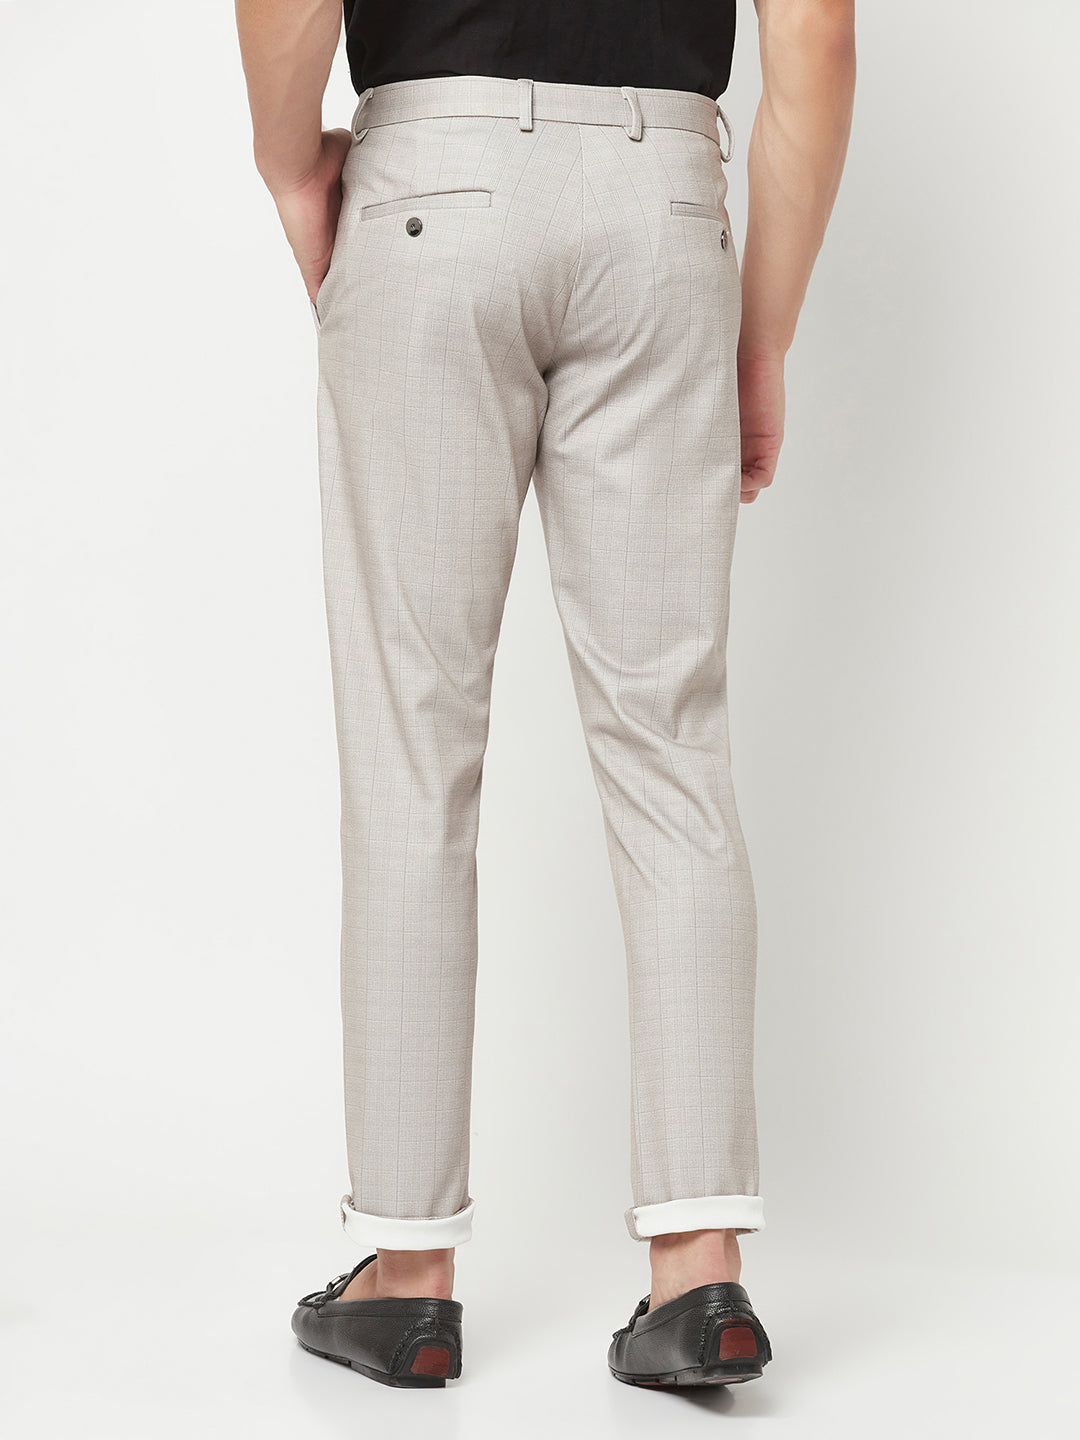 Grey Printed Formal Trousers